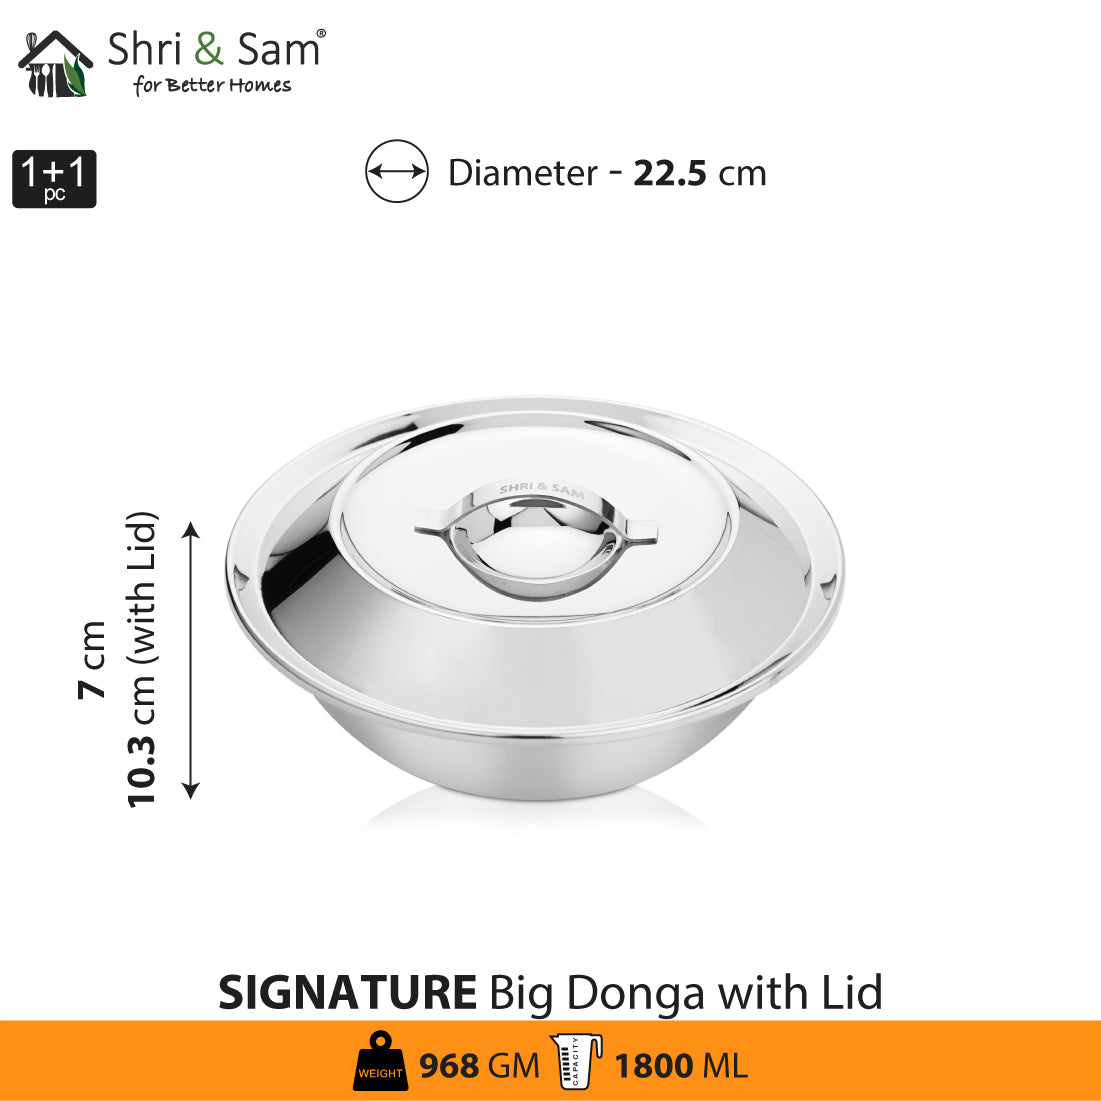 Stainless Steel Big Donga Signature - Shiny